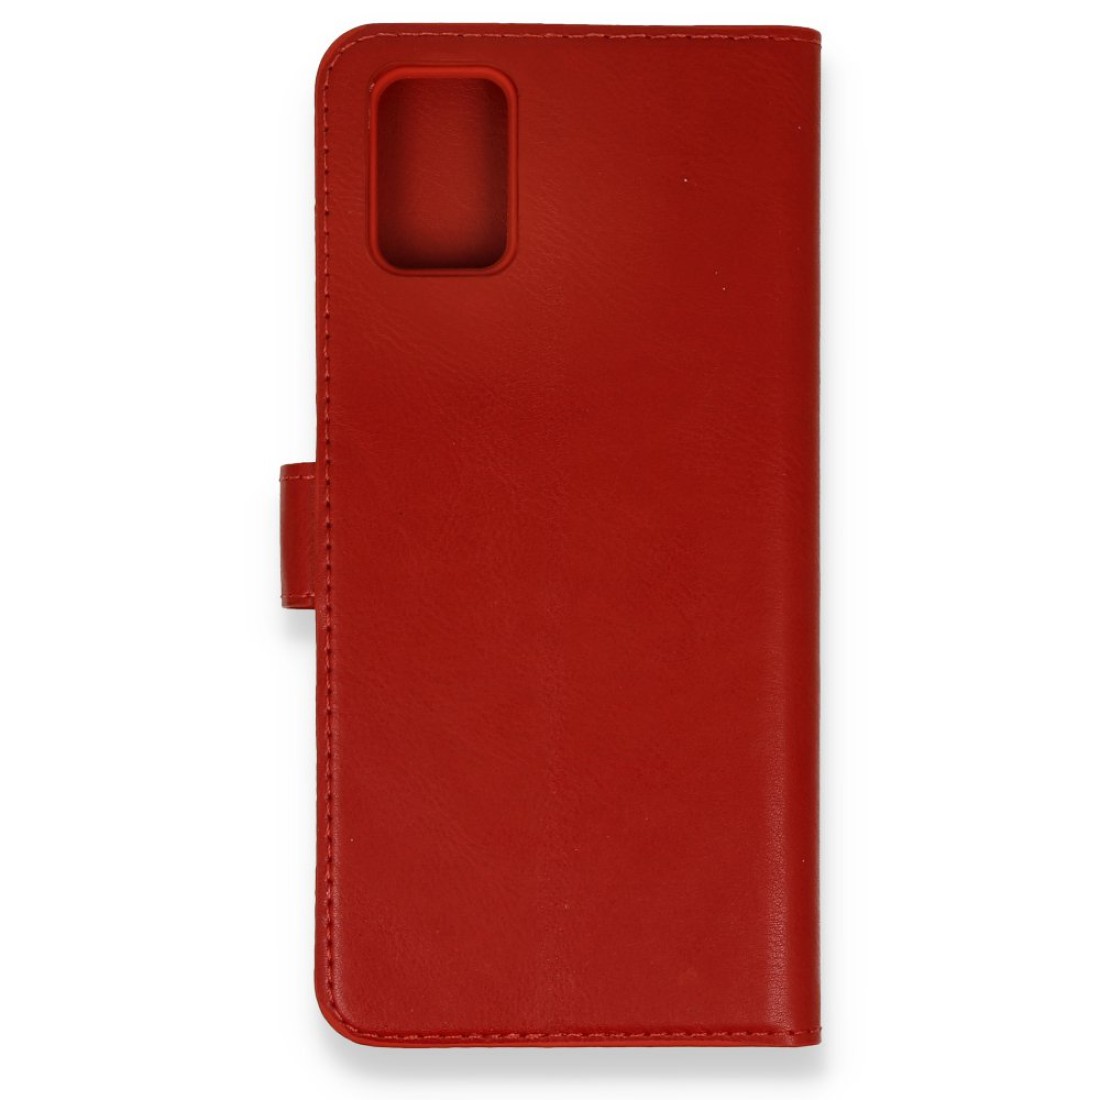 Samsung Galaxy A71 Kılıf Trend S Plus Kapaklı Kılıf - Kırmızı